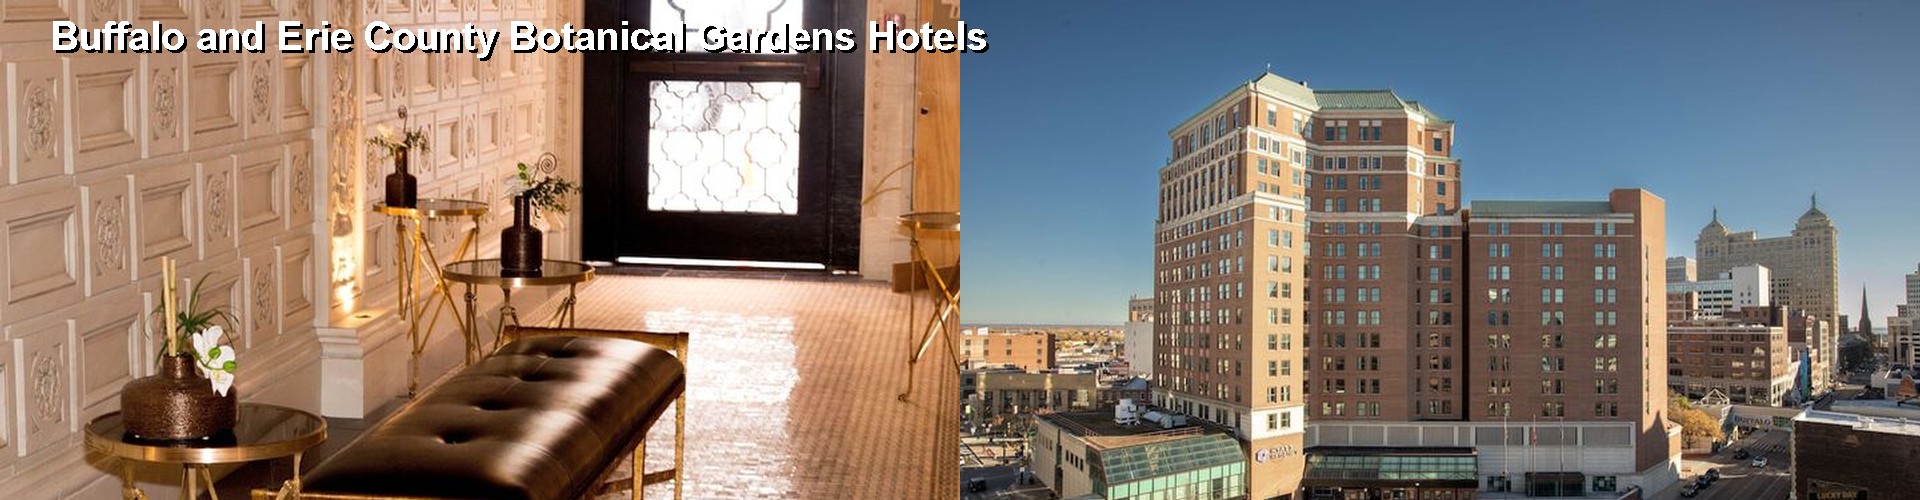 5 Best Hotels near Buffalo and Erie County Botanical Gardens